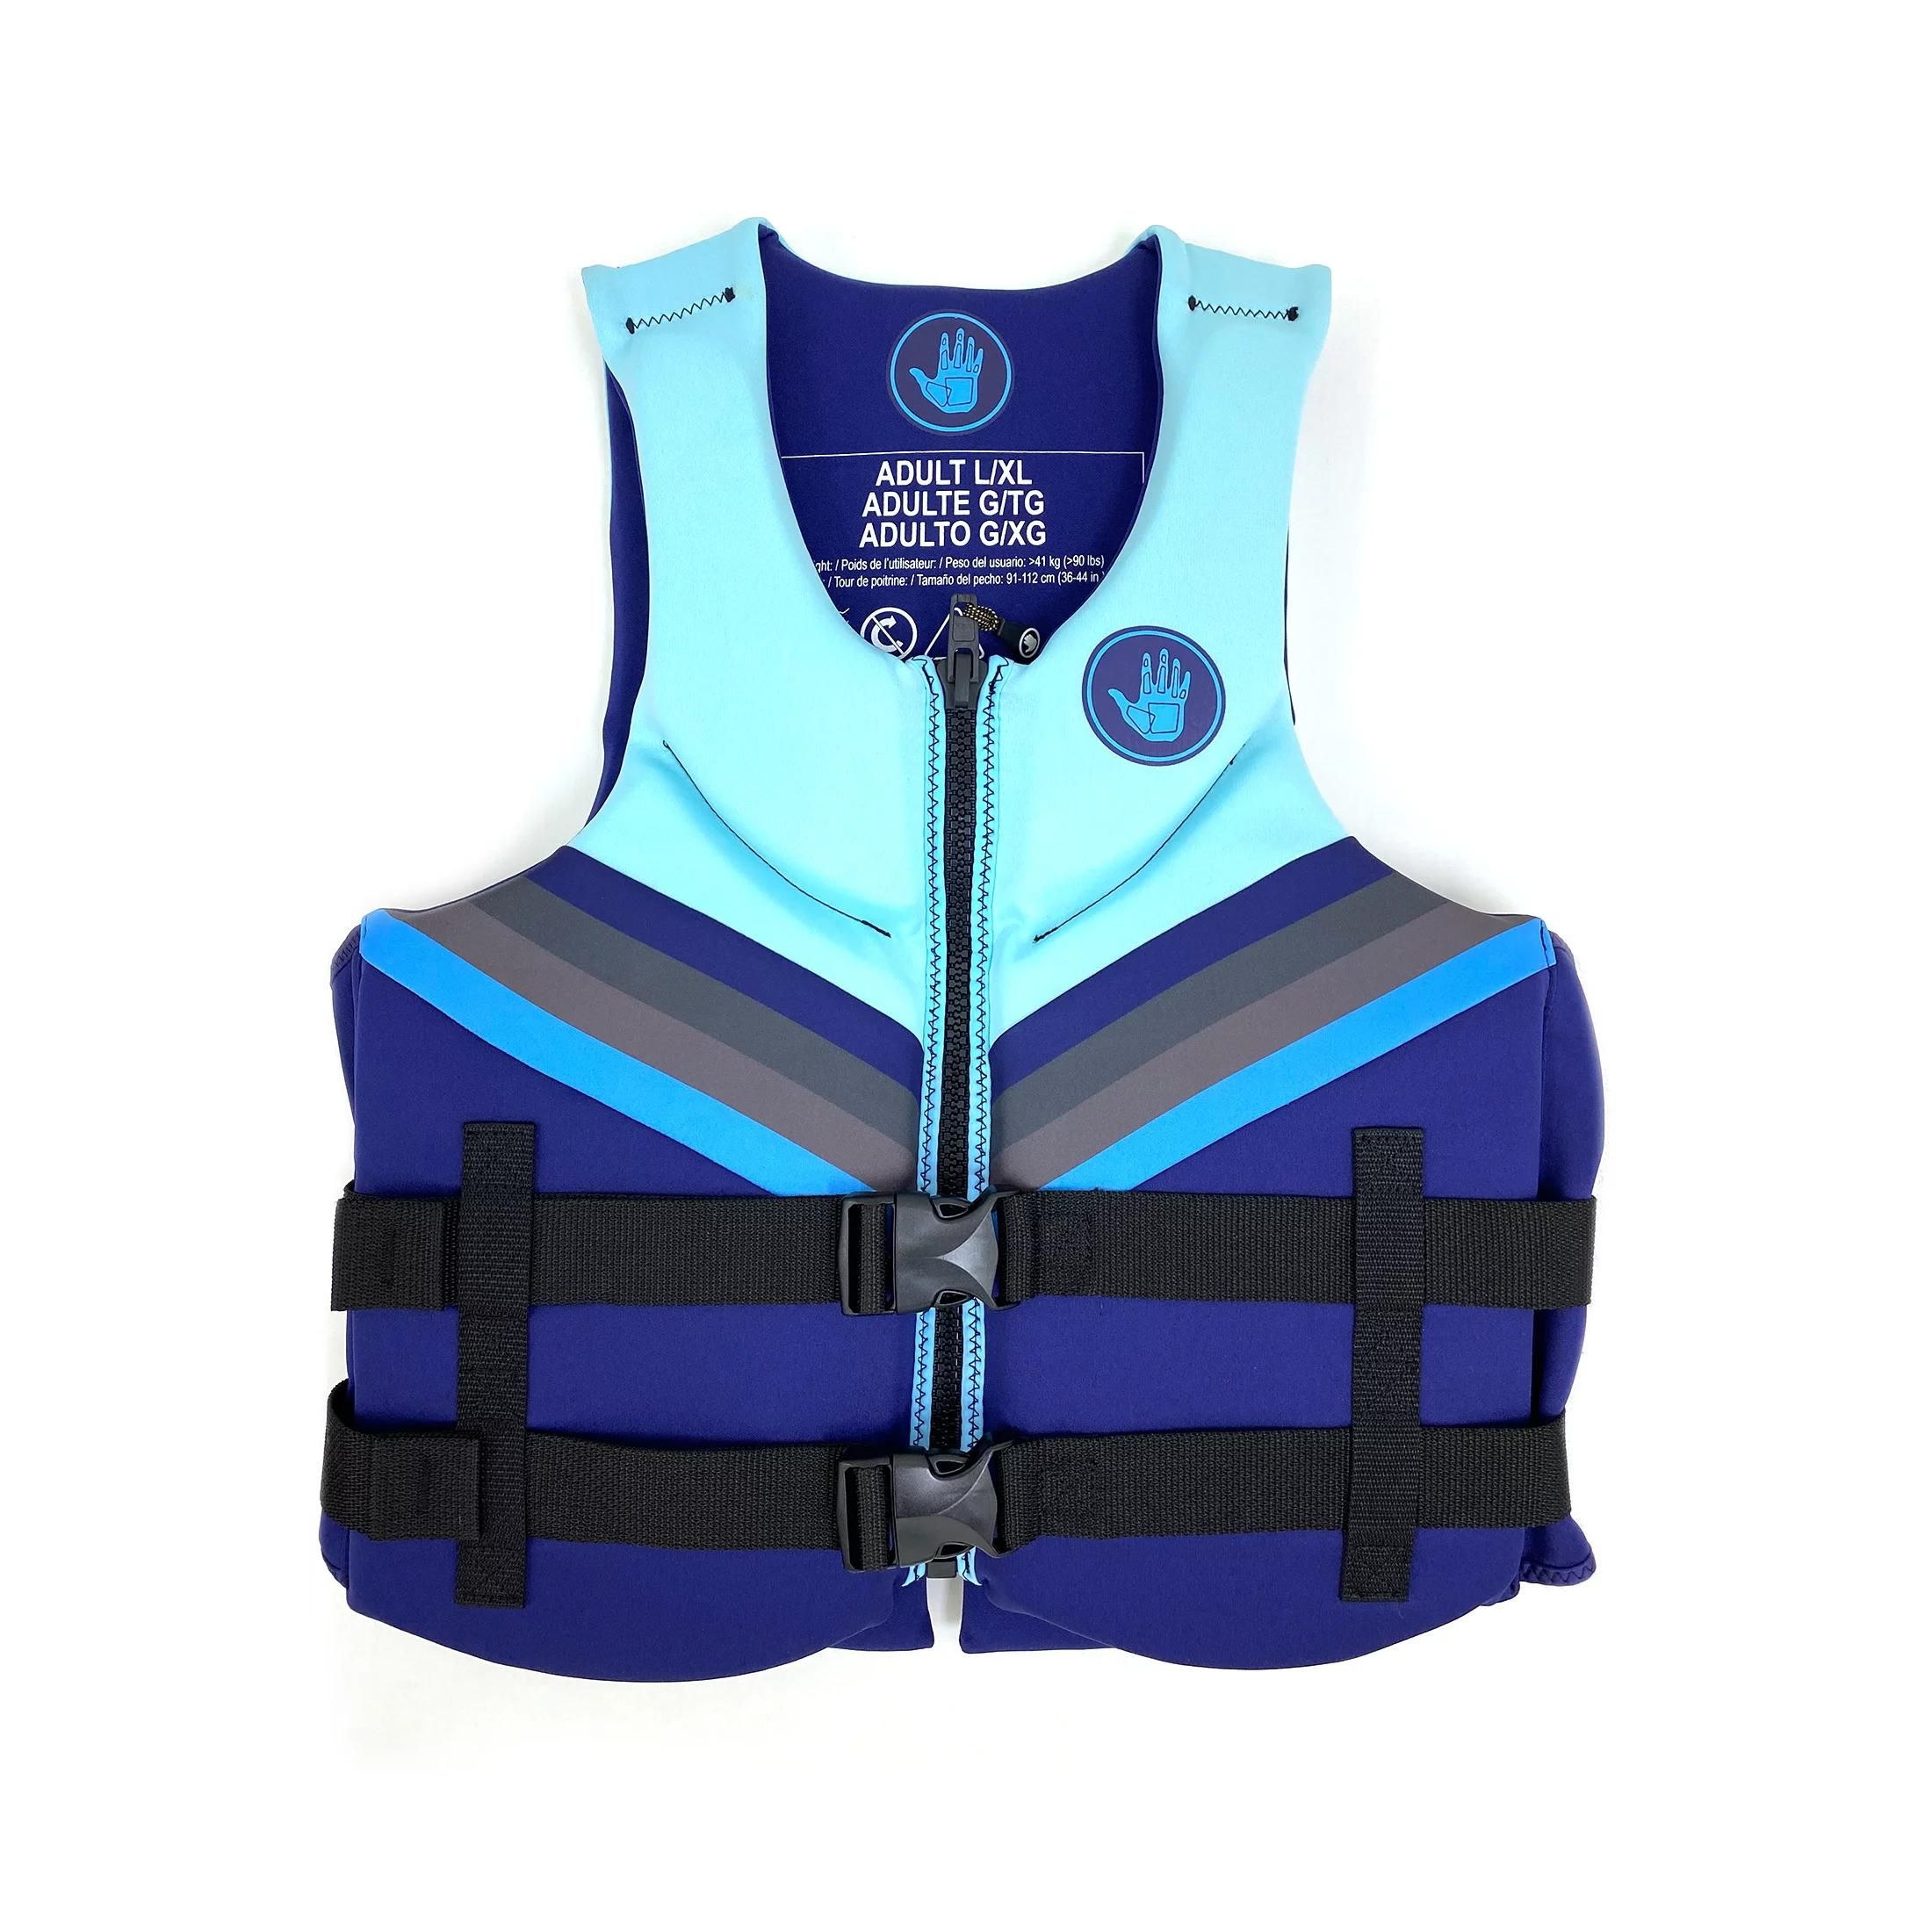 Details about   Men Women Neoprene Life Jacket Adult Float Rafting Surfing Protective Life Vest 